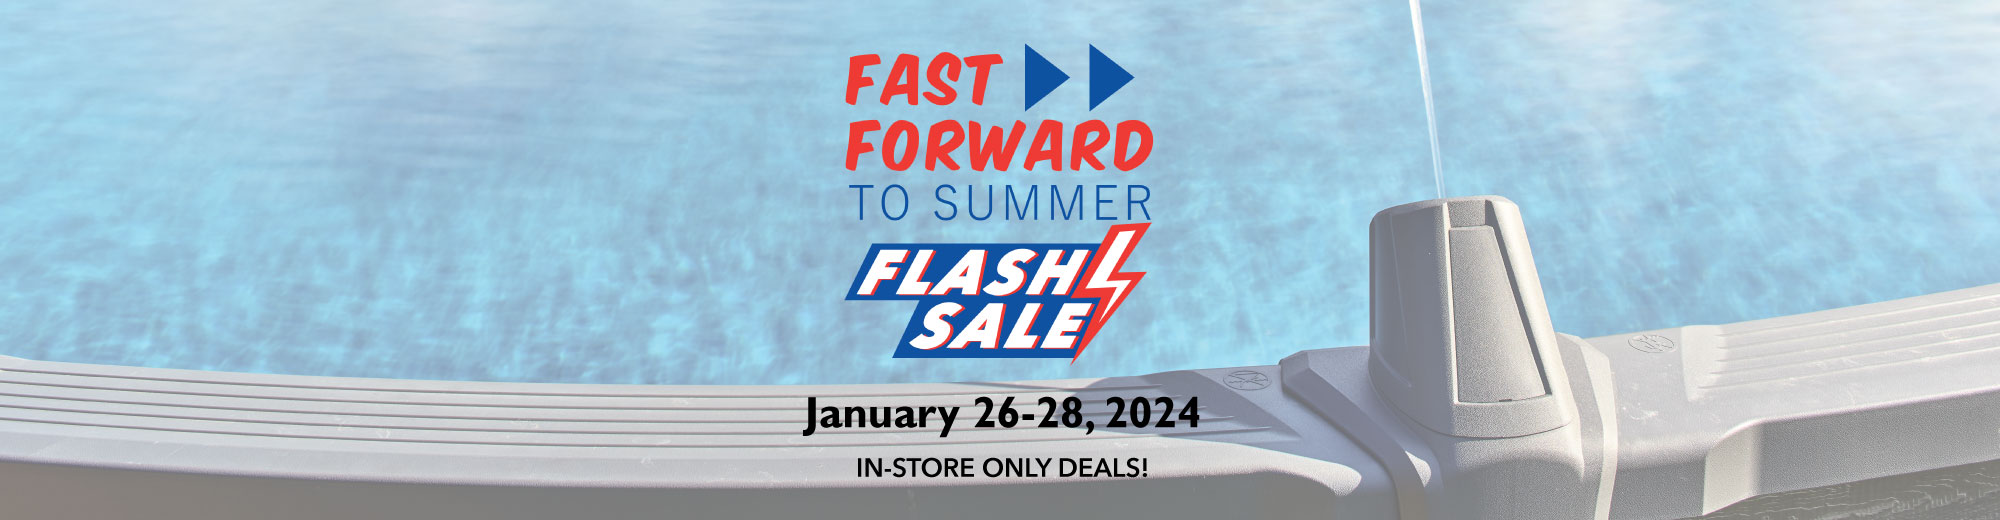 Fast Forward to Summer Flash Sale